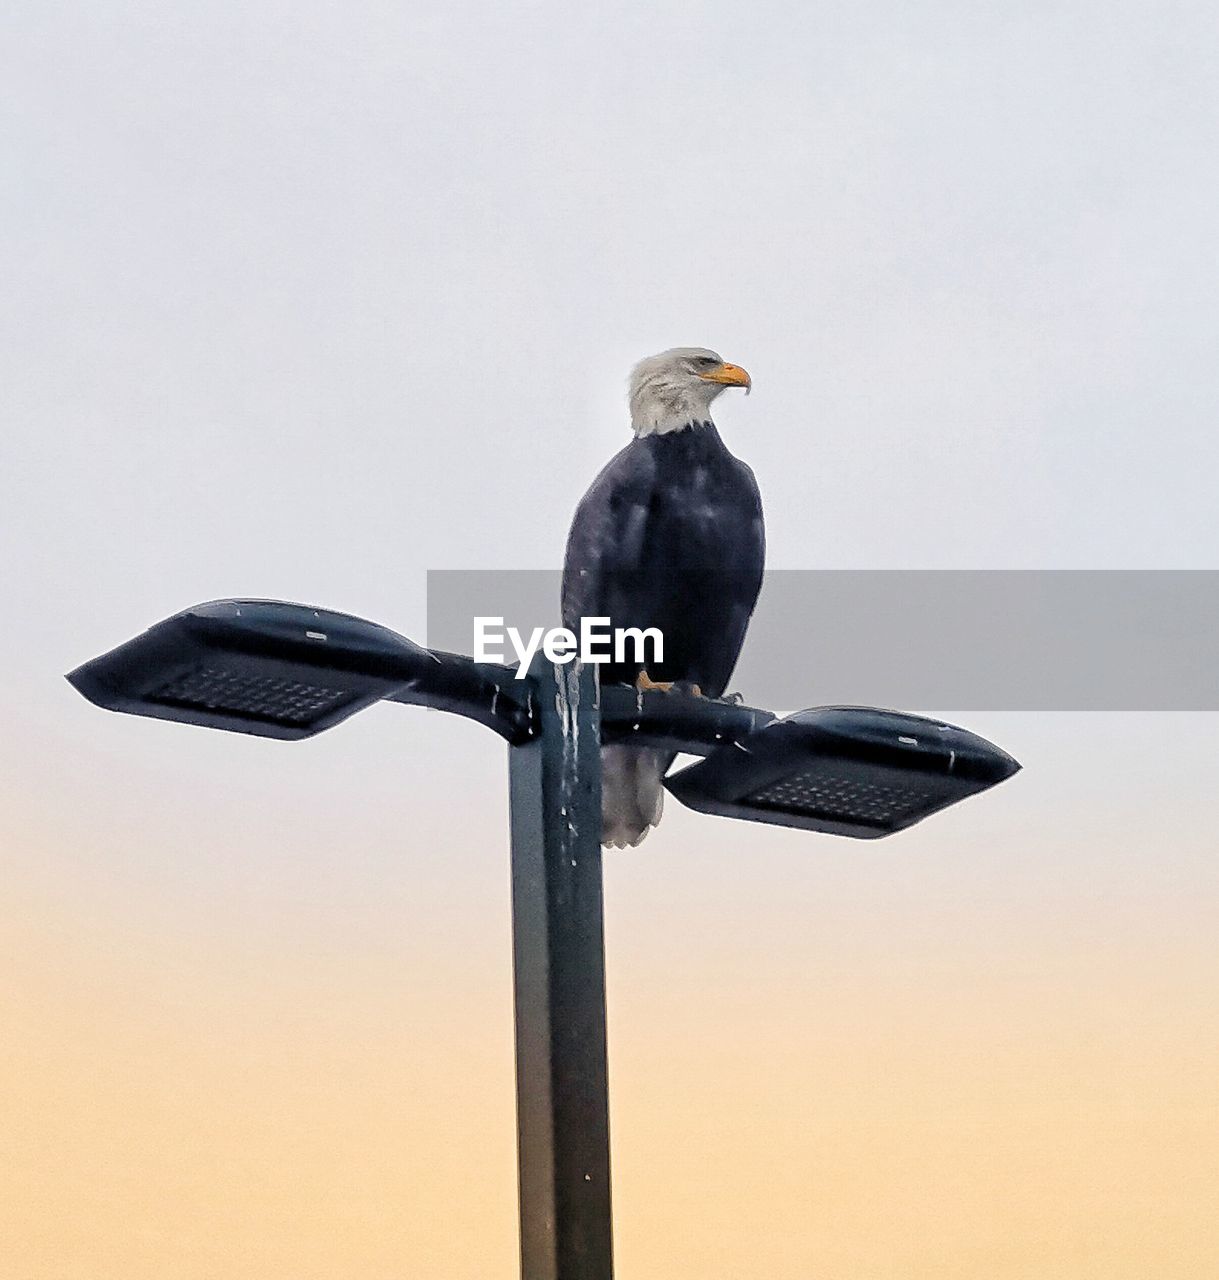 Eagle sitting on light post in delta, british columbia